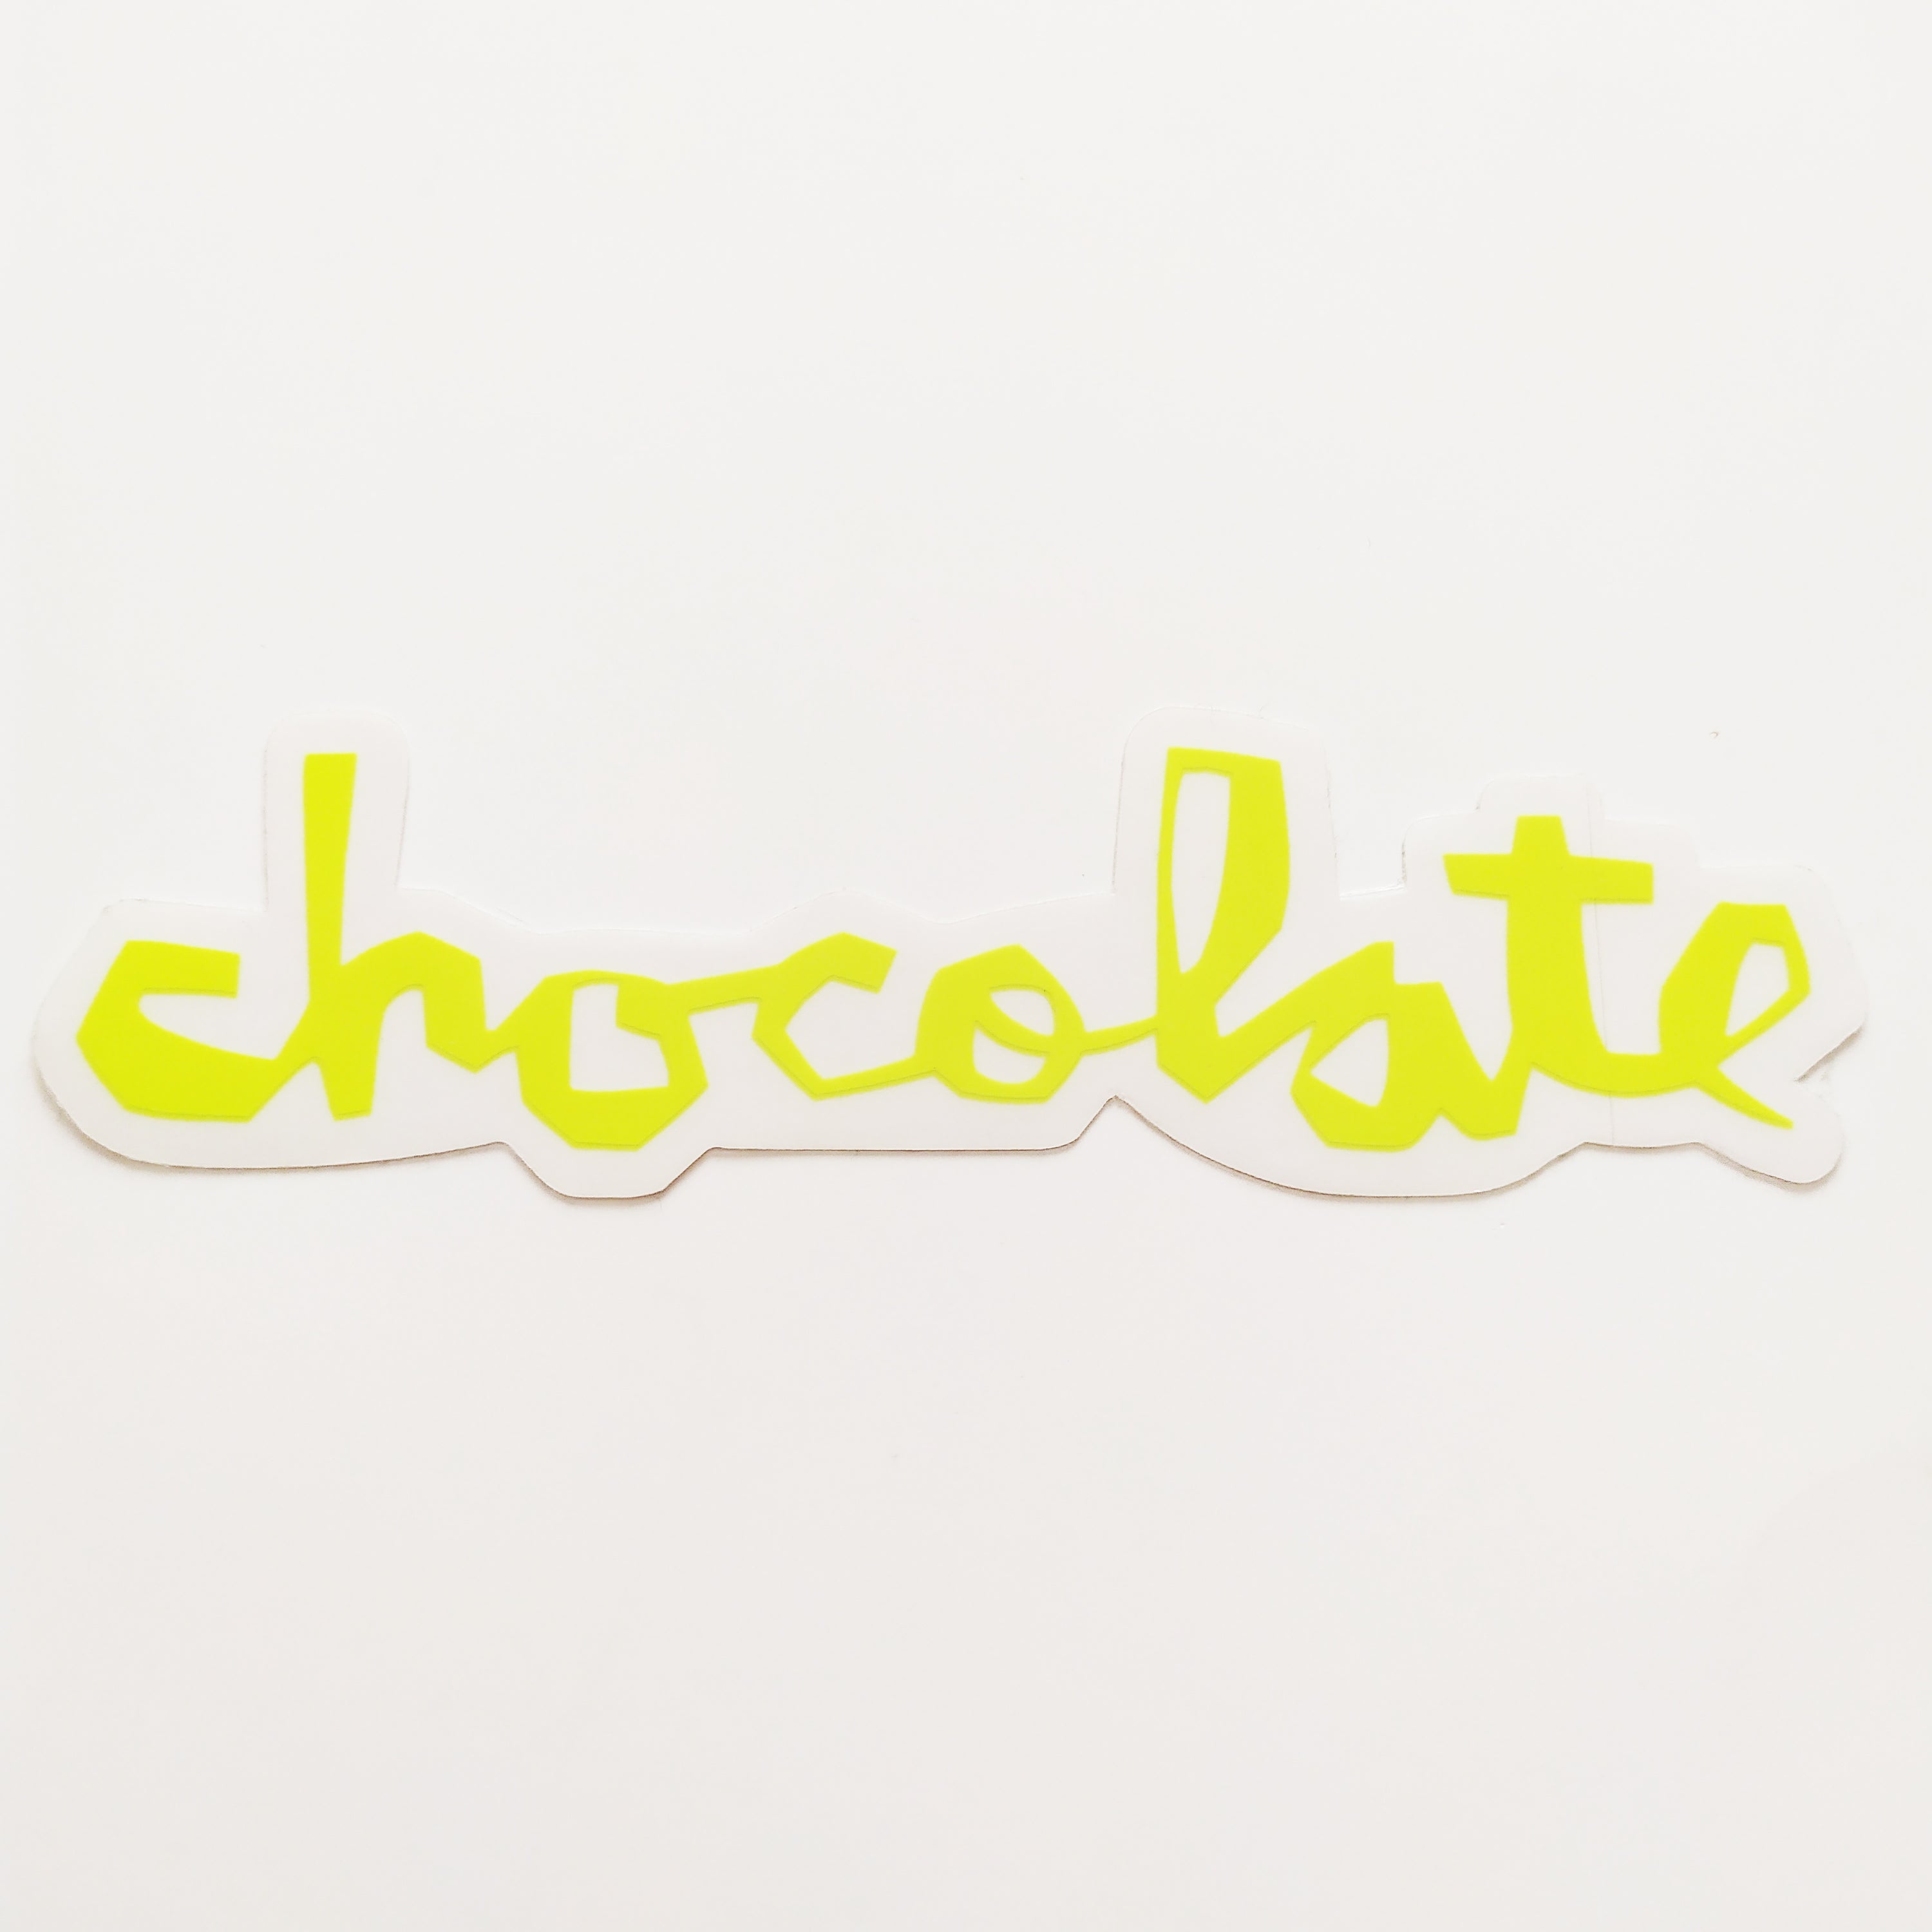 Chocolate Chunk Logo Skateboard Sticker - Lime Green - 13.5cm across approx - SkateboardStickers.com